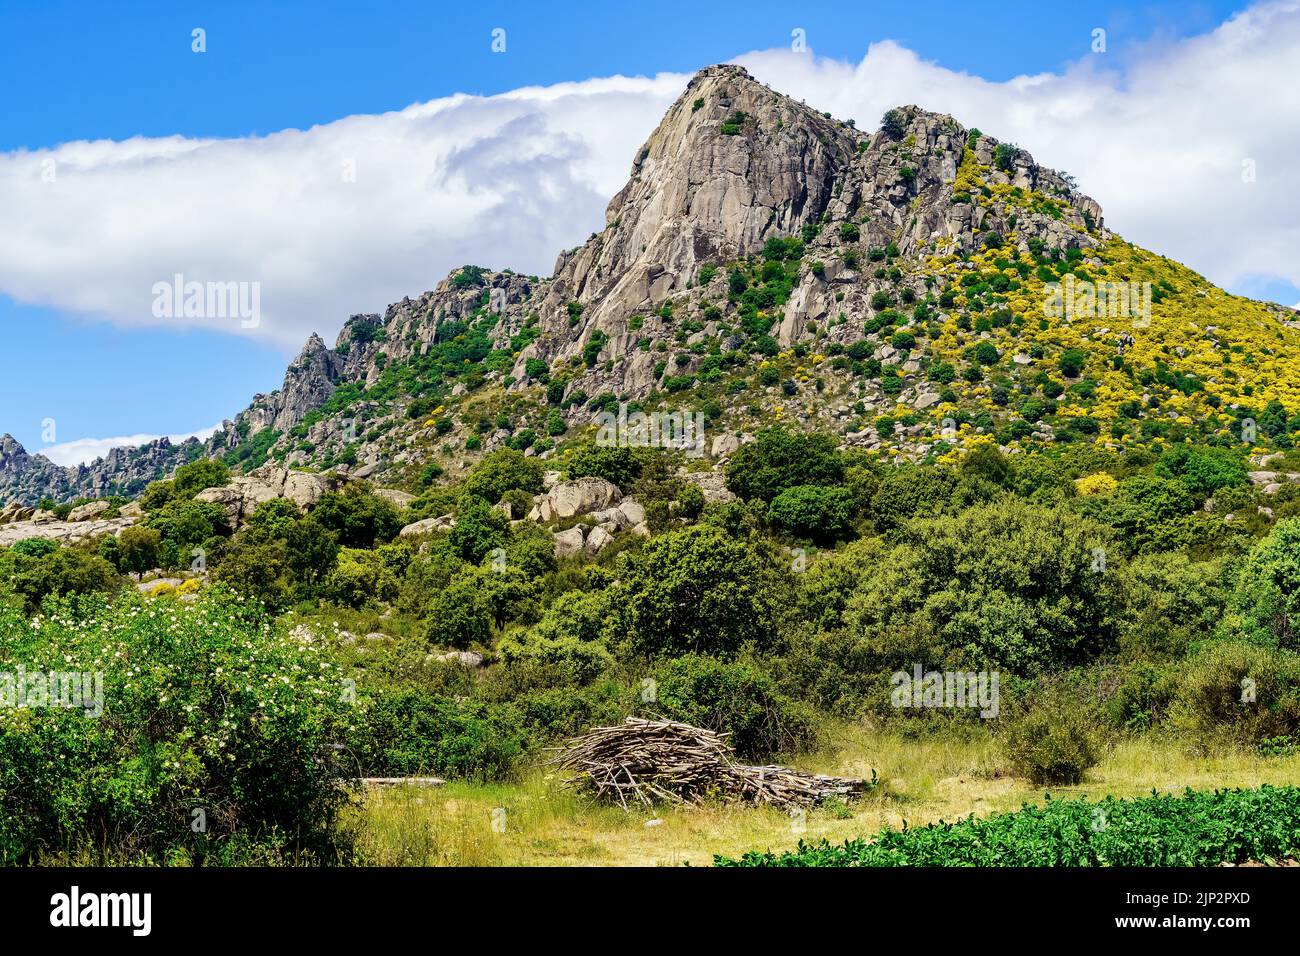 Vertical wall rocky mountain with green plants and yellow flowers. Pico de la Miel in La Cabrera Madrid. Spain. Stock Photo